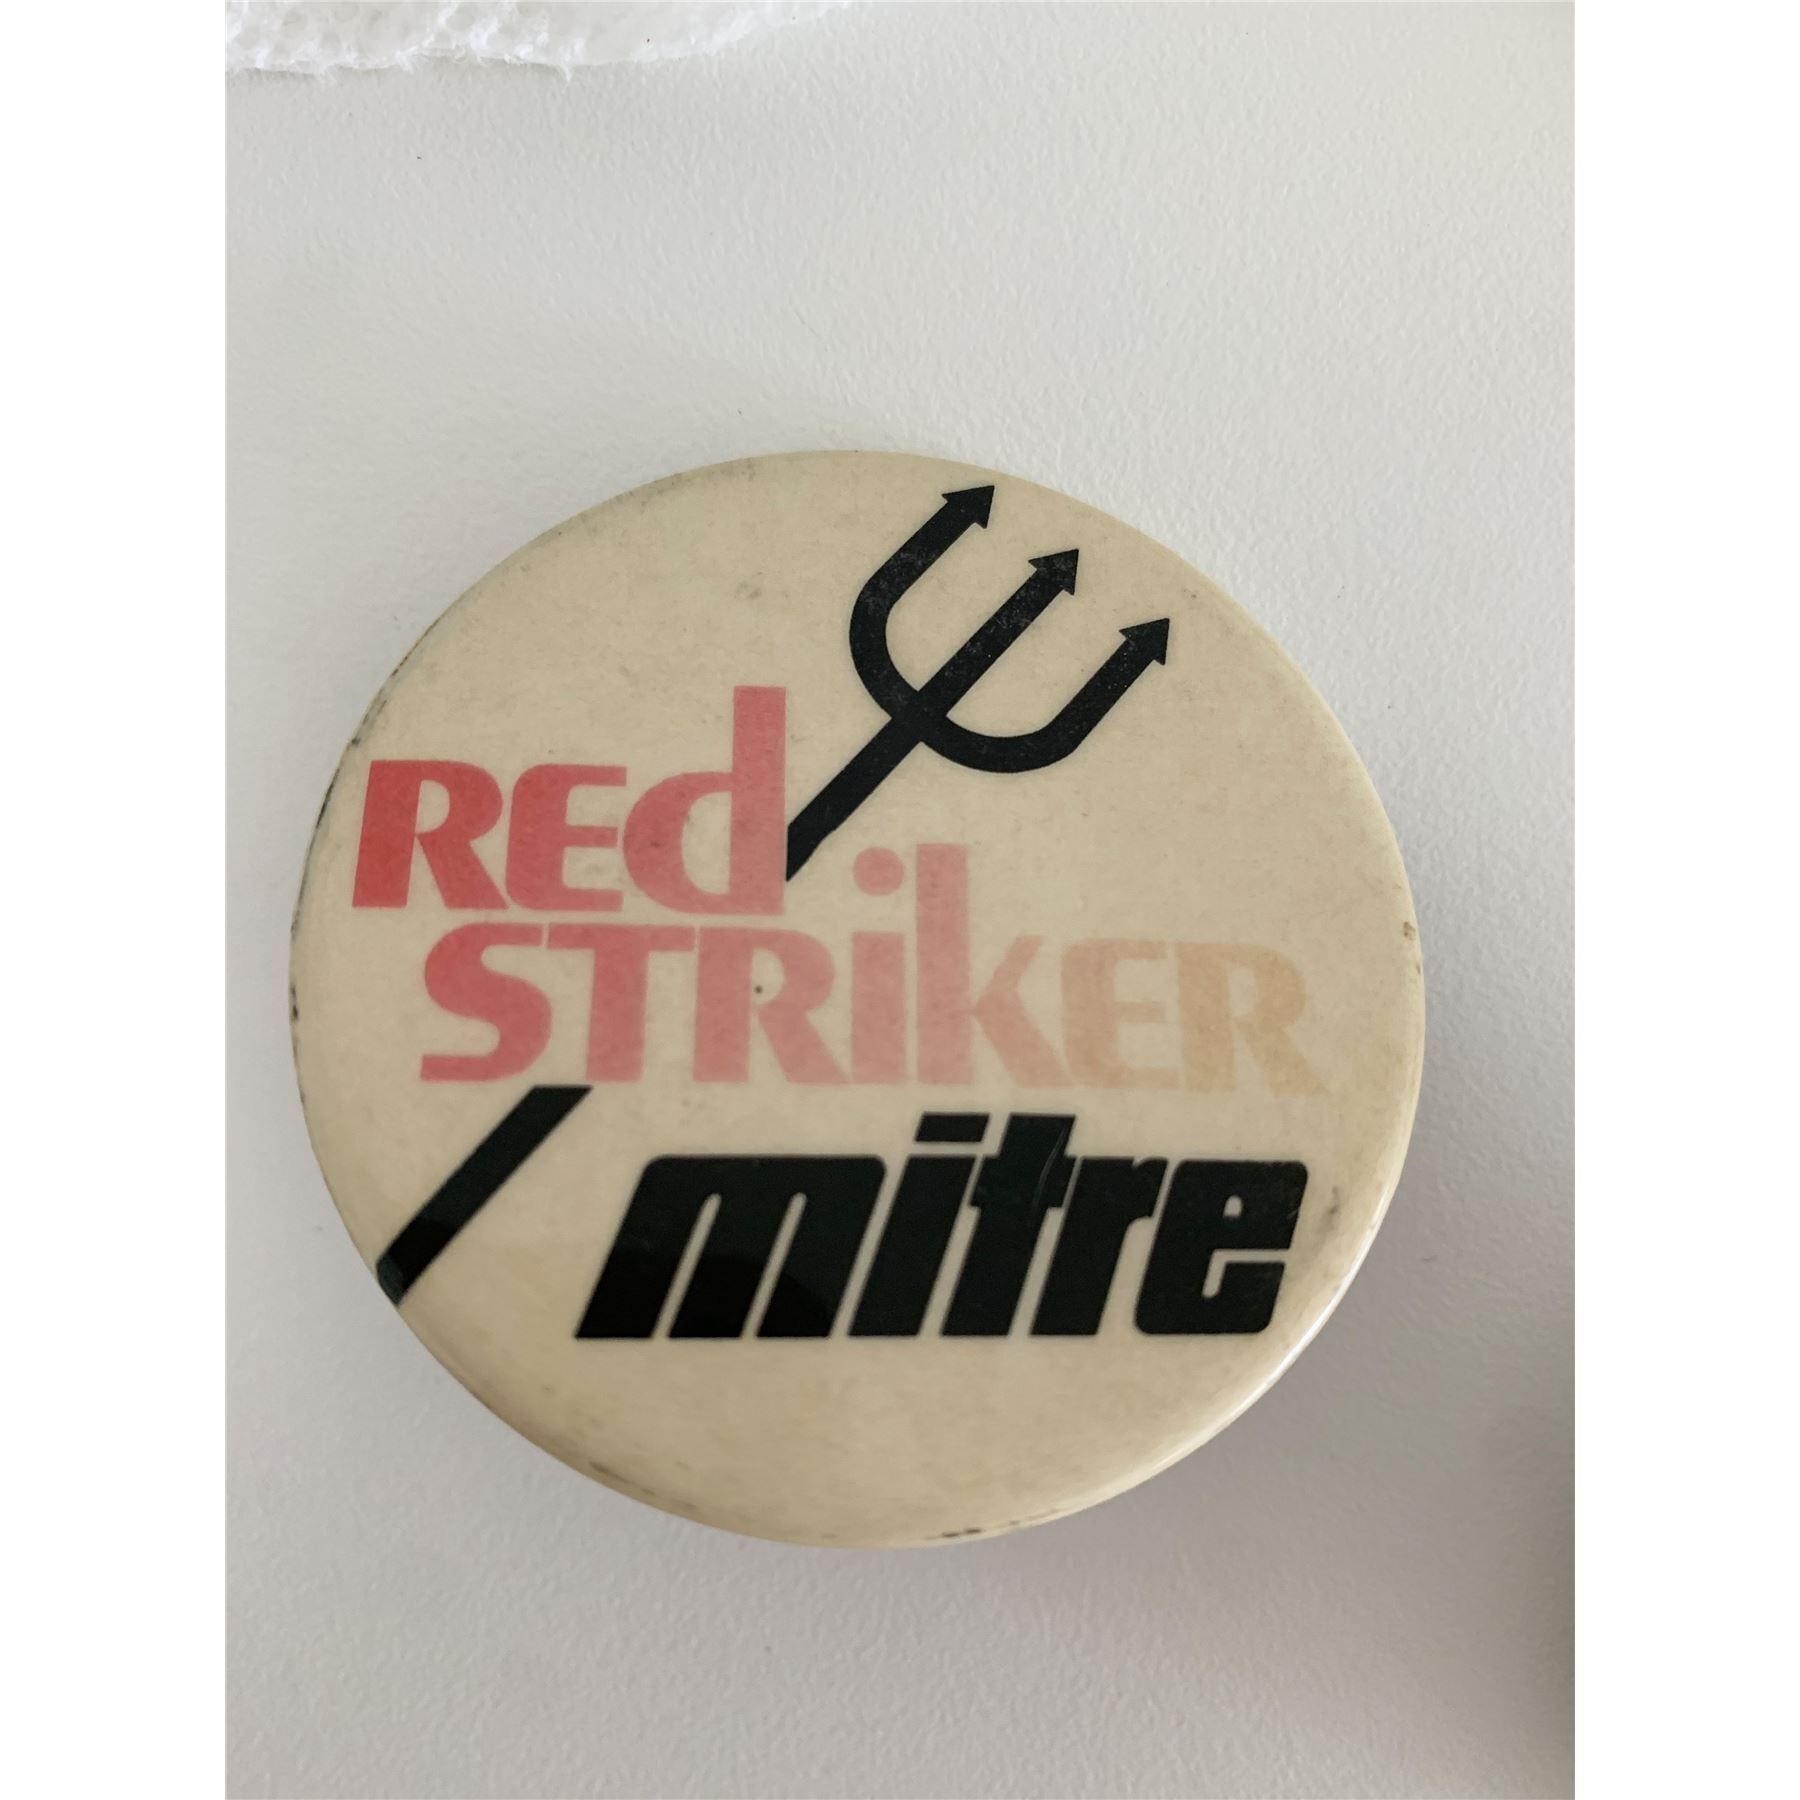 Striker Nitre vintage pin